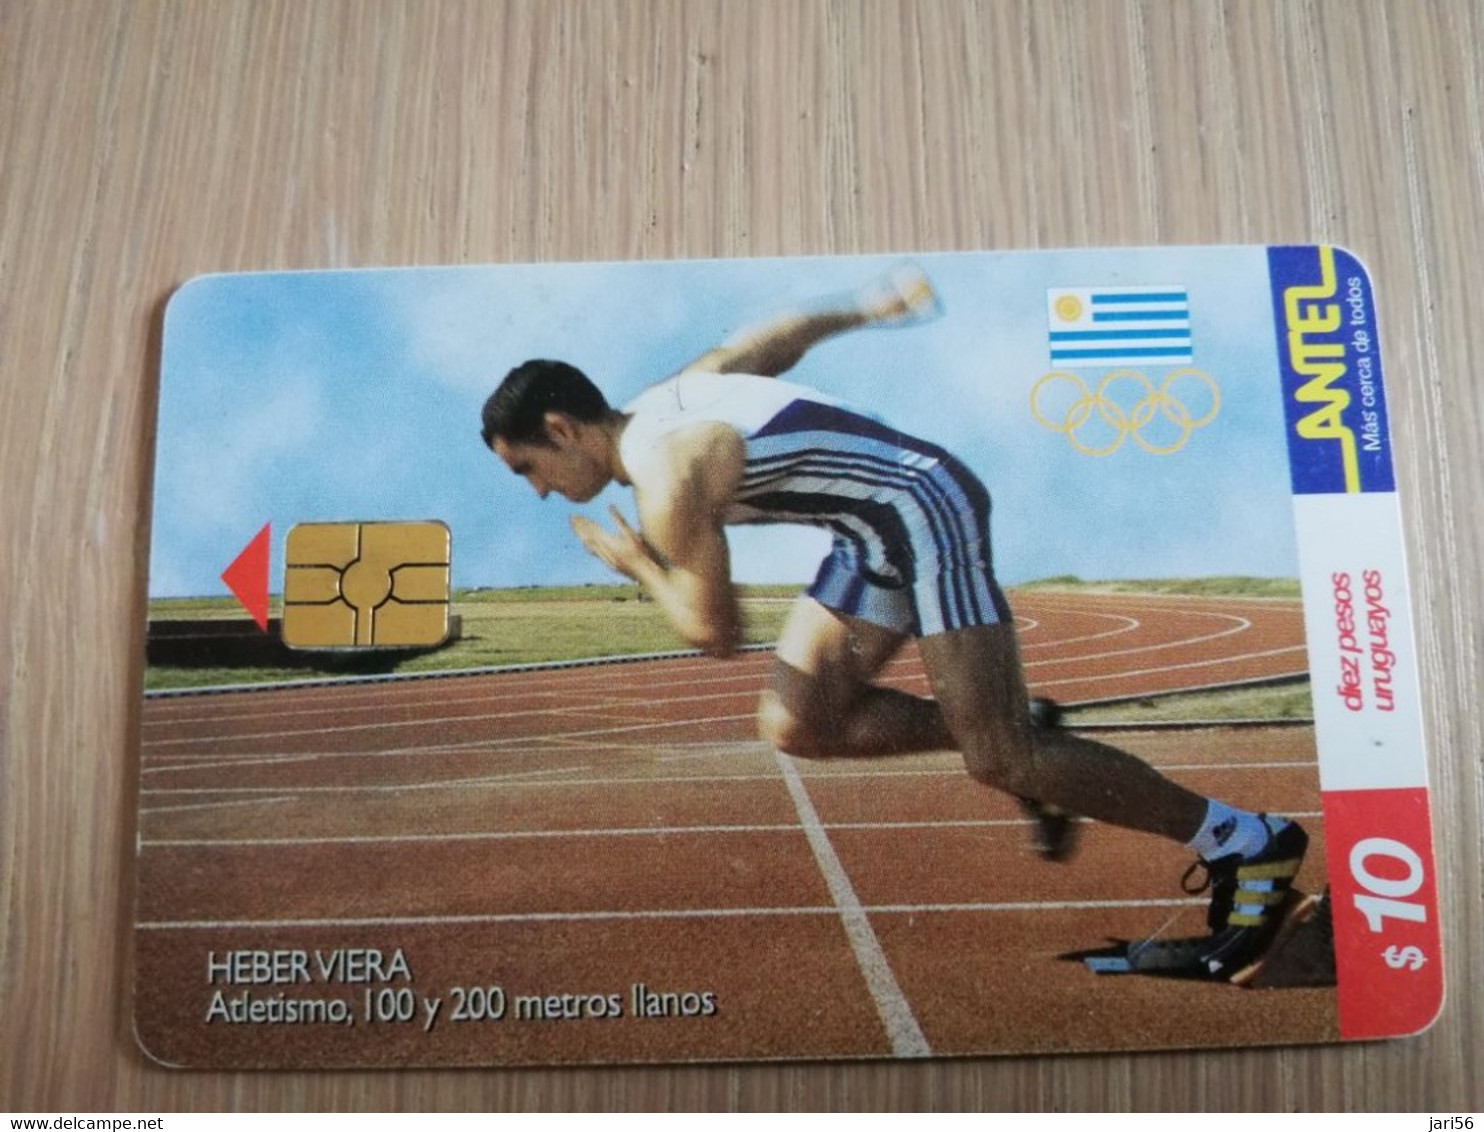 URUGUAY CHIPCARD  SPORTS    $10     HEBER VIERA  ATLETISMO           Nice Used Card    **4542** - Uruguay